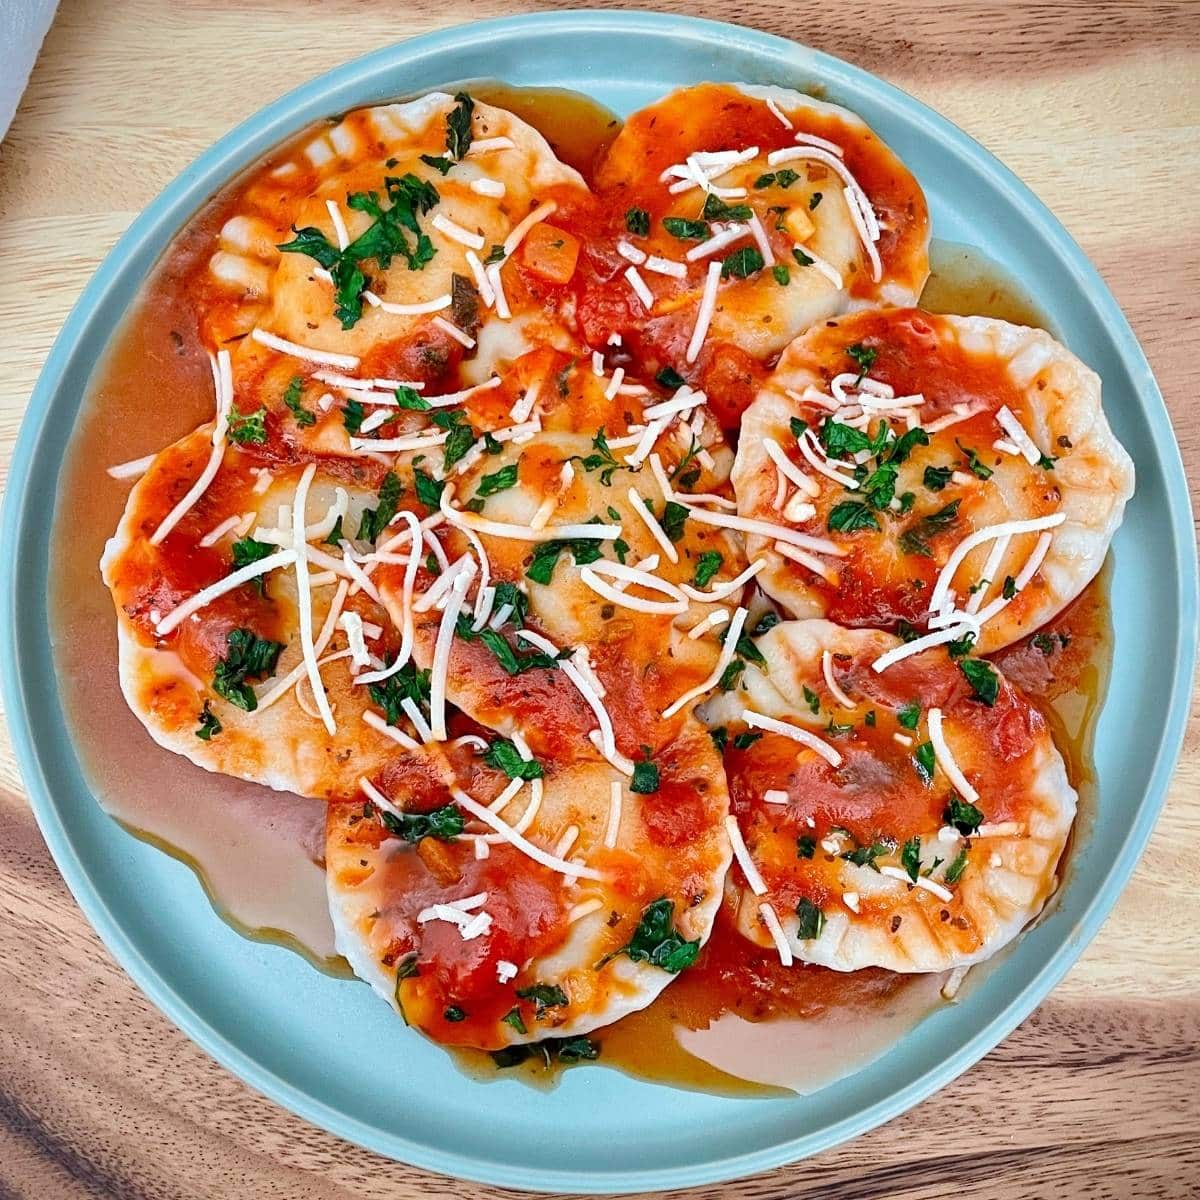 Blue plate with vegan ravioli and tomato sauce.